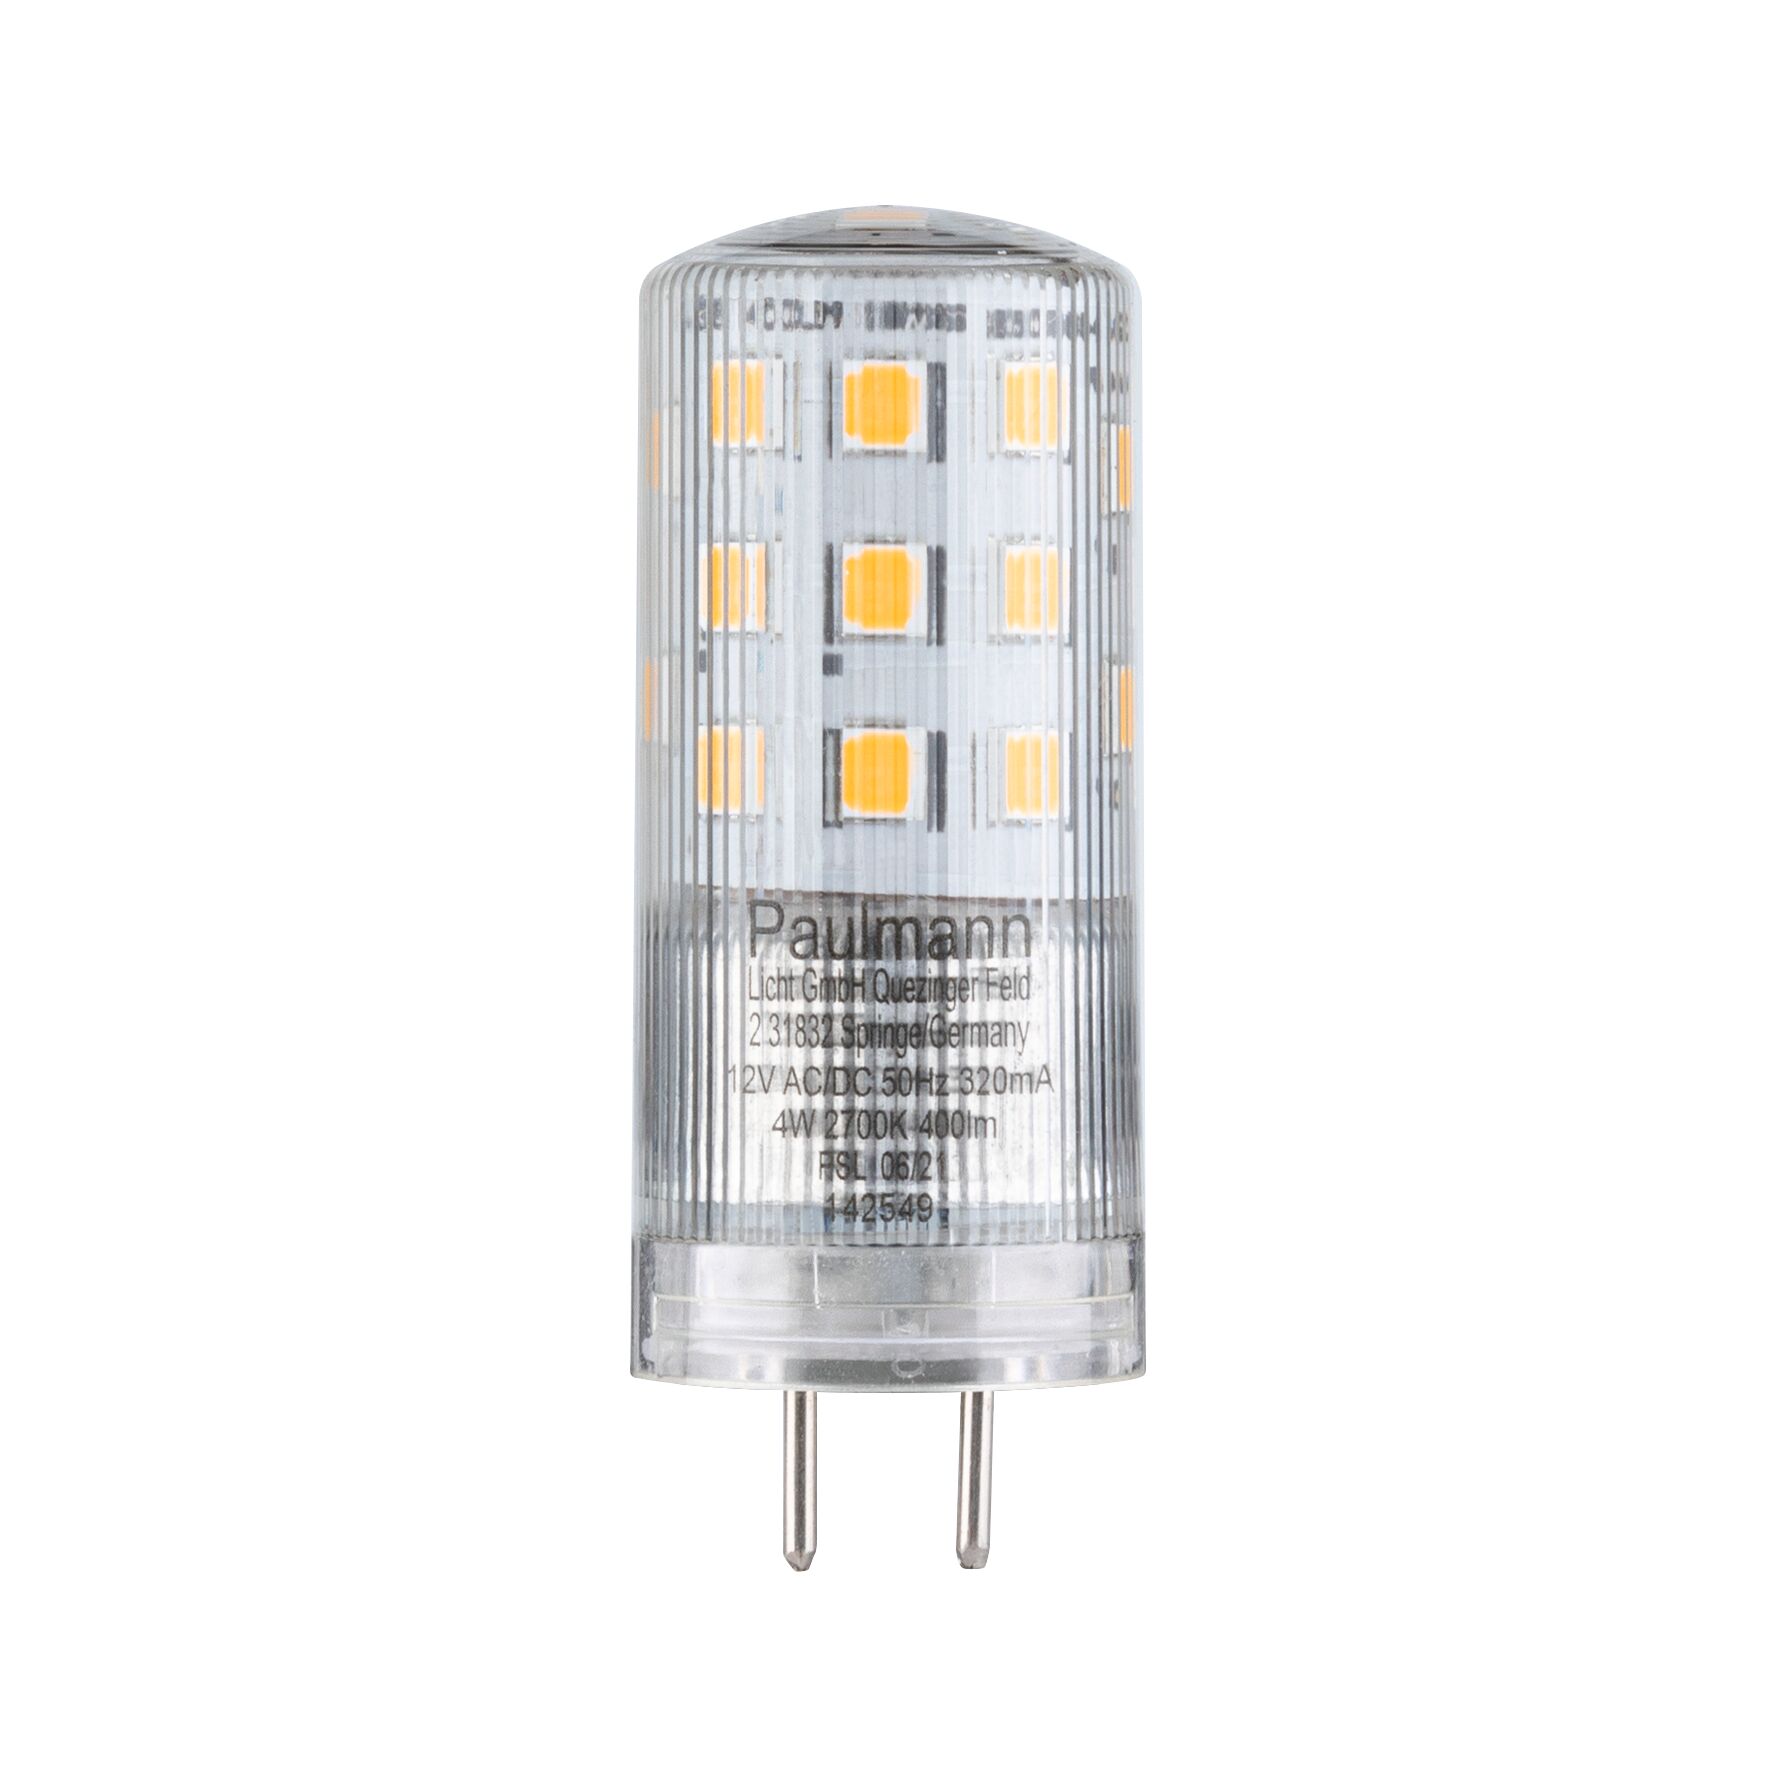 Paulmann 28833 GY6,35 LED Lampe Stiftsockel 12V 4W warmweißes Licht dimmbar